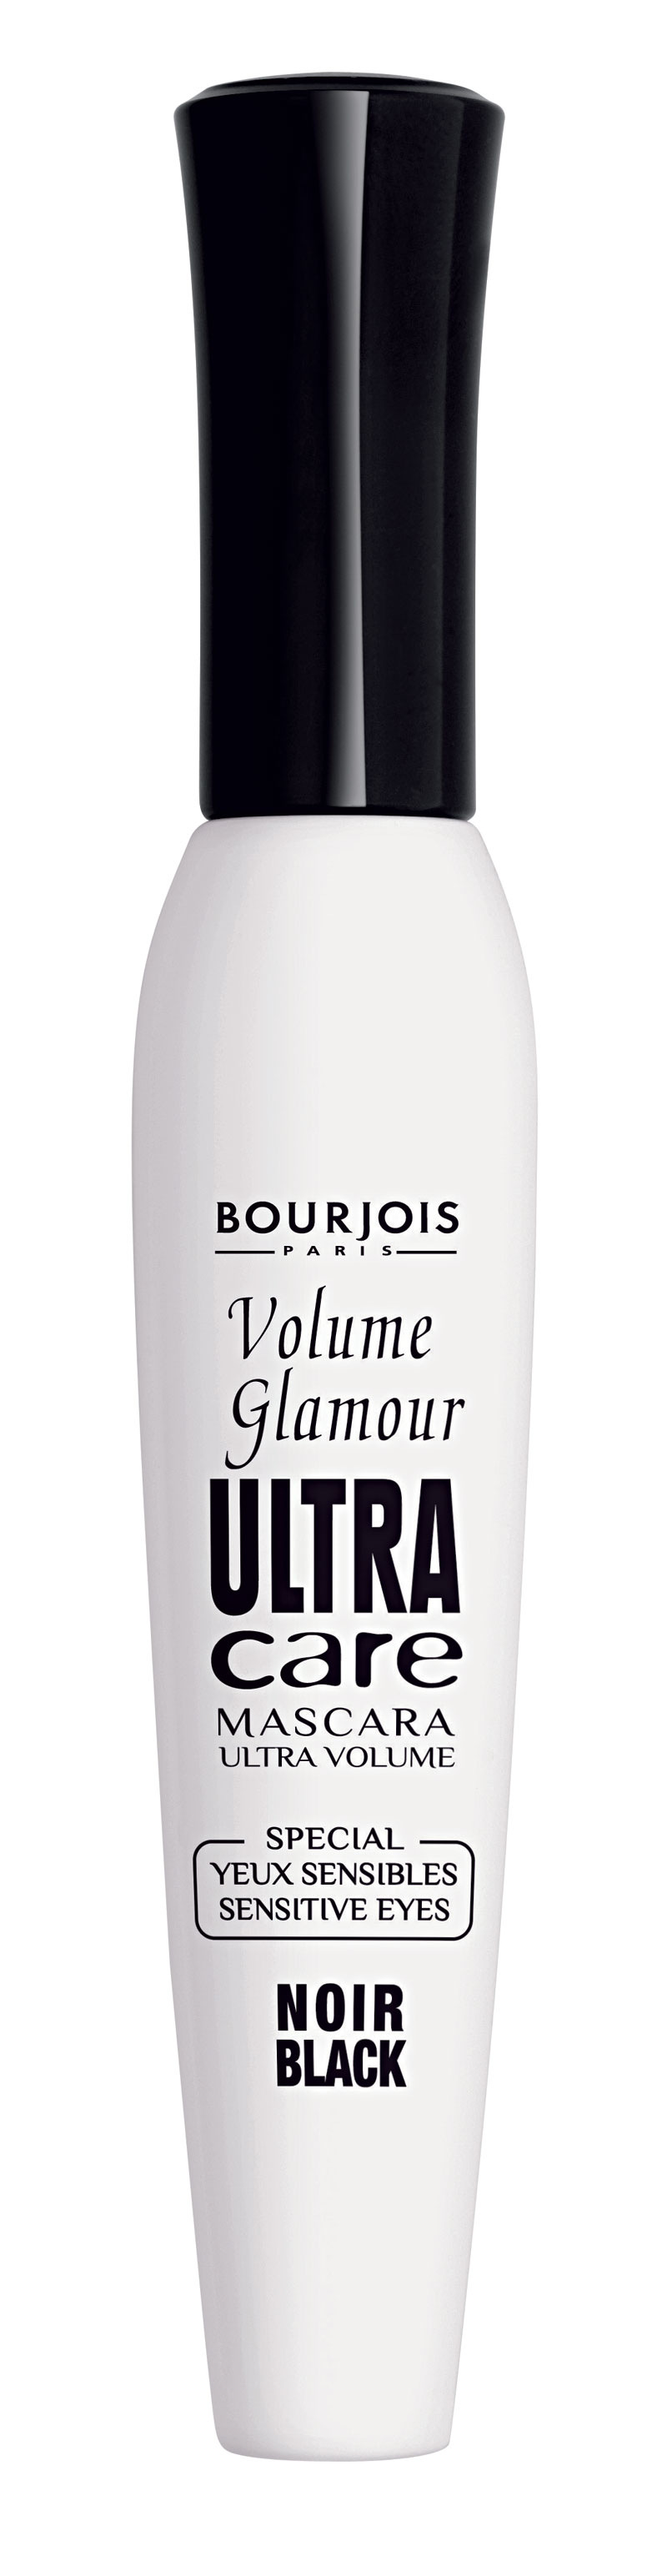 Mascara-Volume-Glamour-Ultra-Care-Bourjois